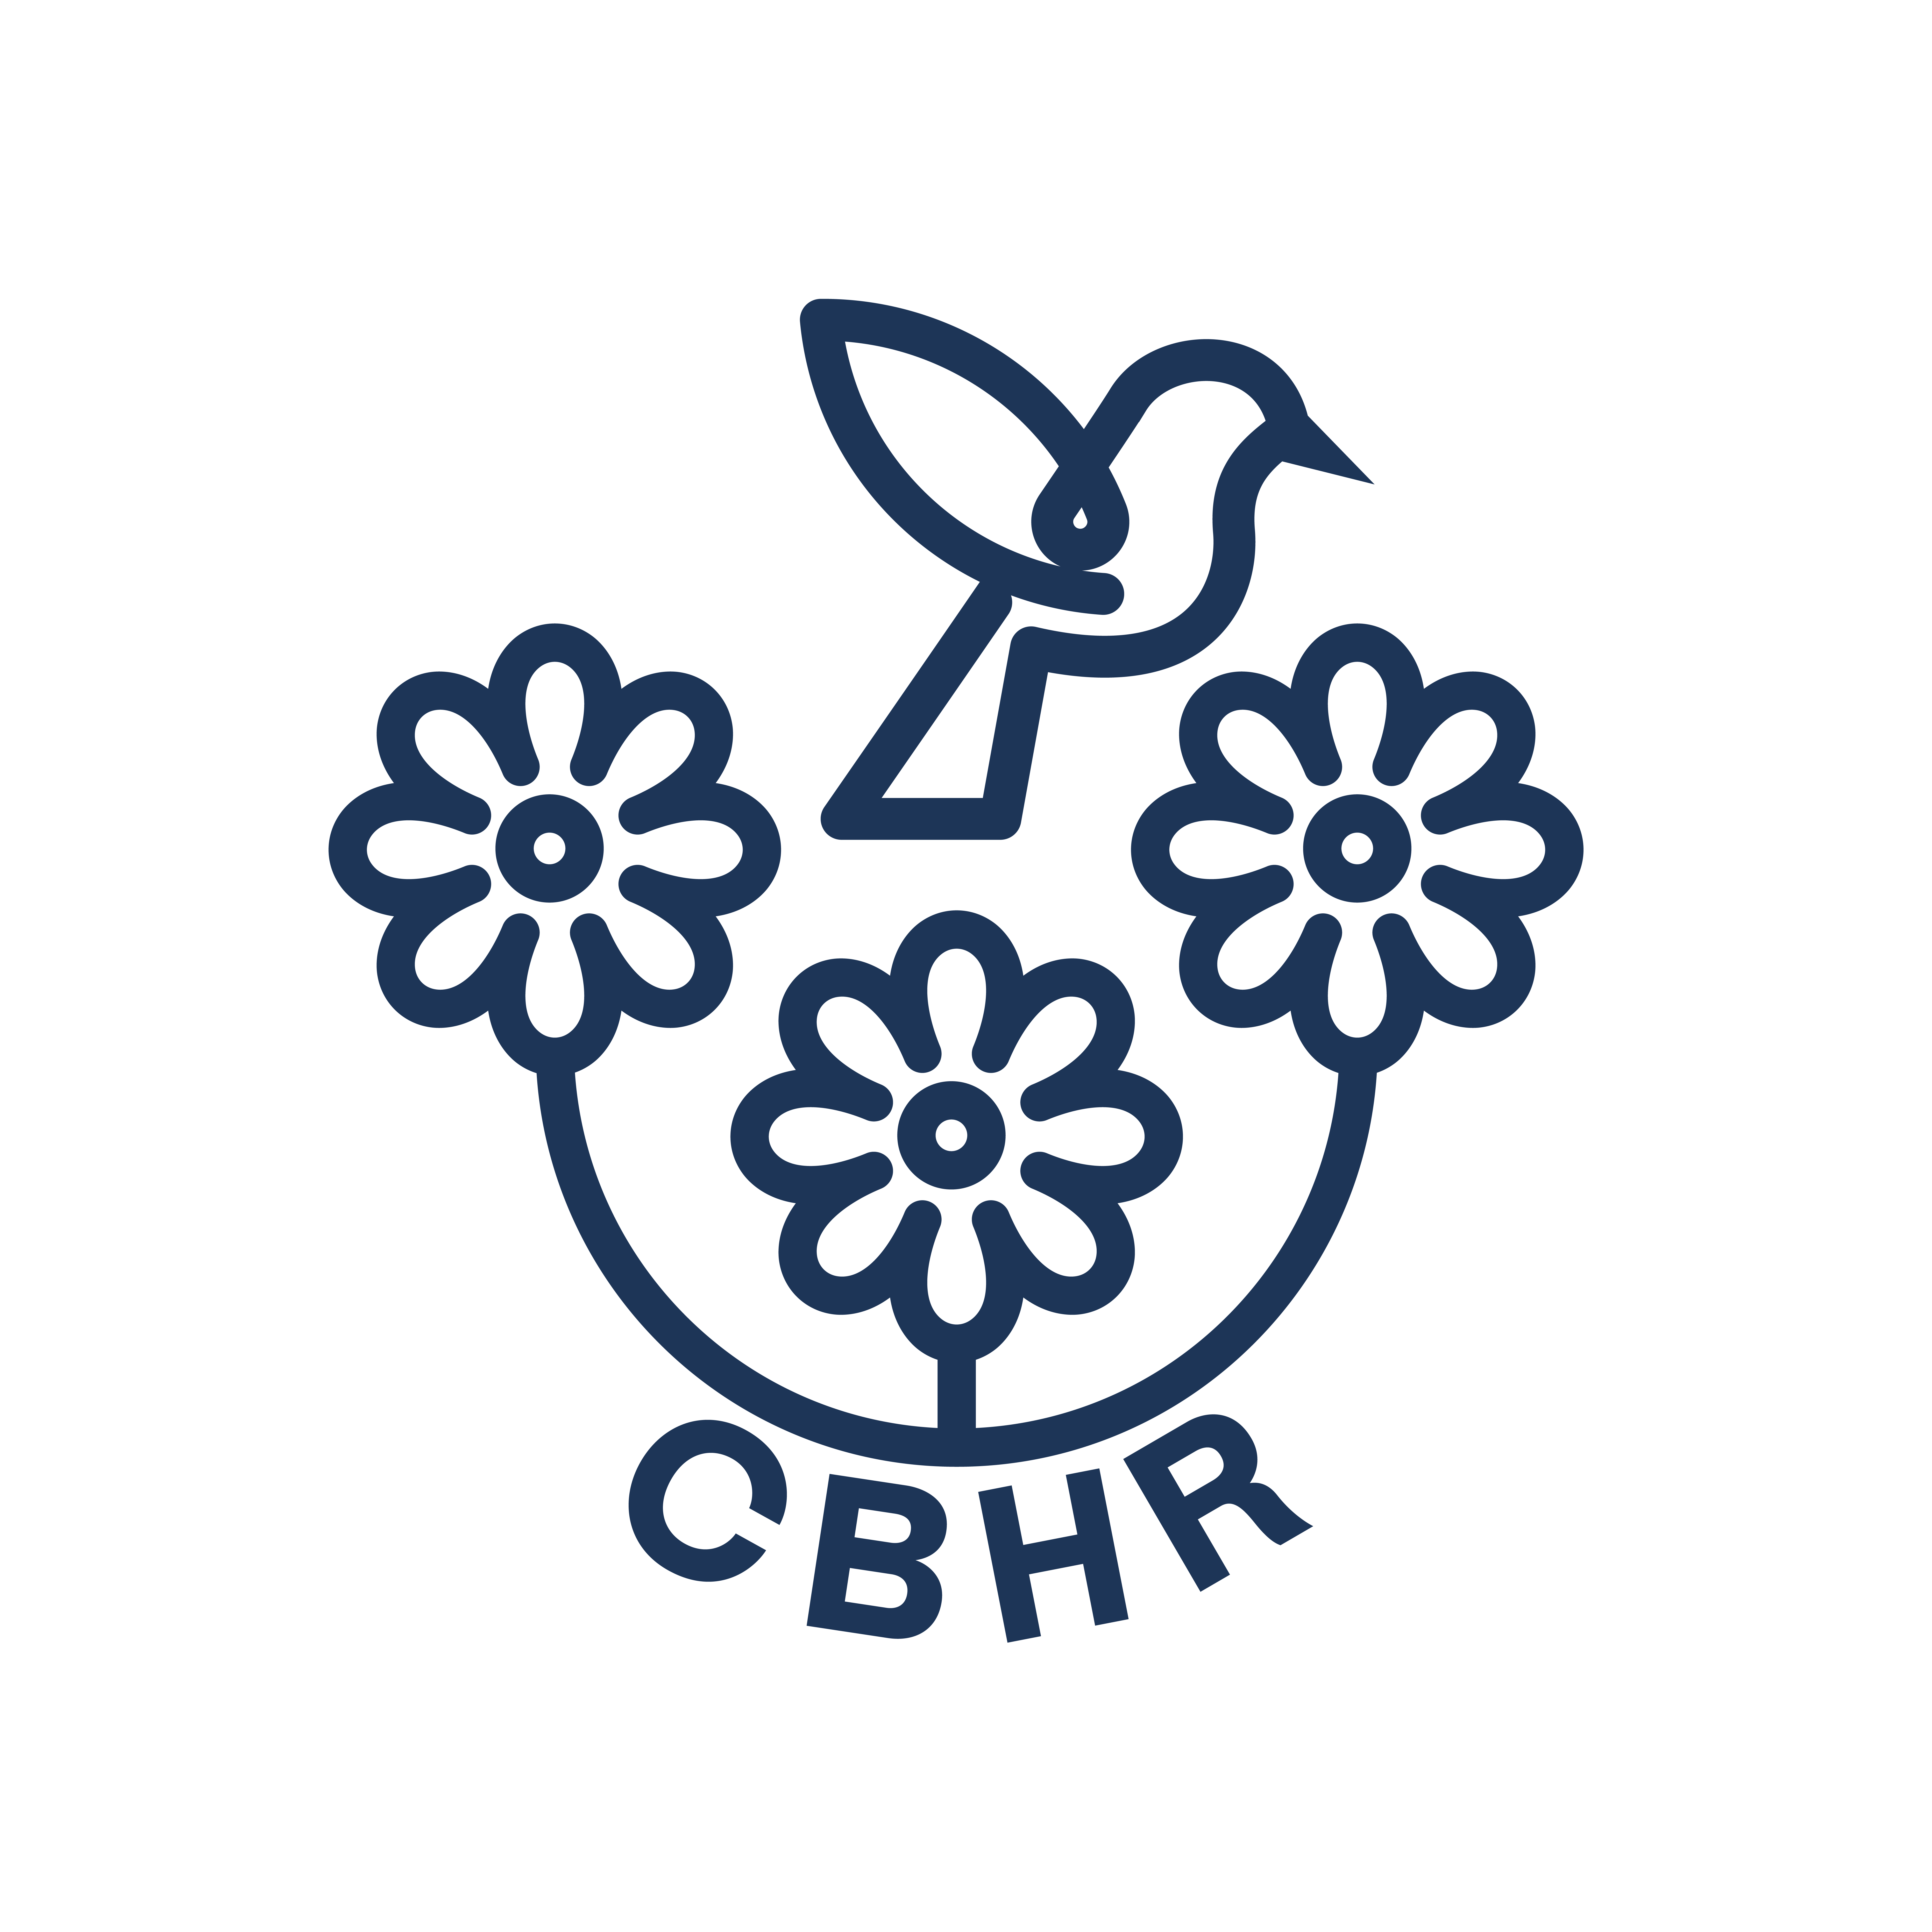 CBHR Brand Logo